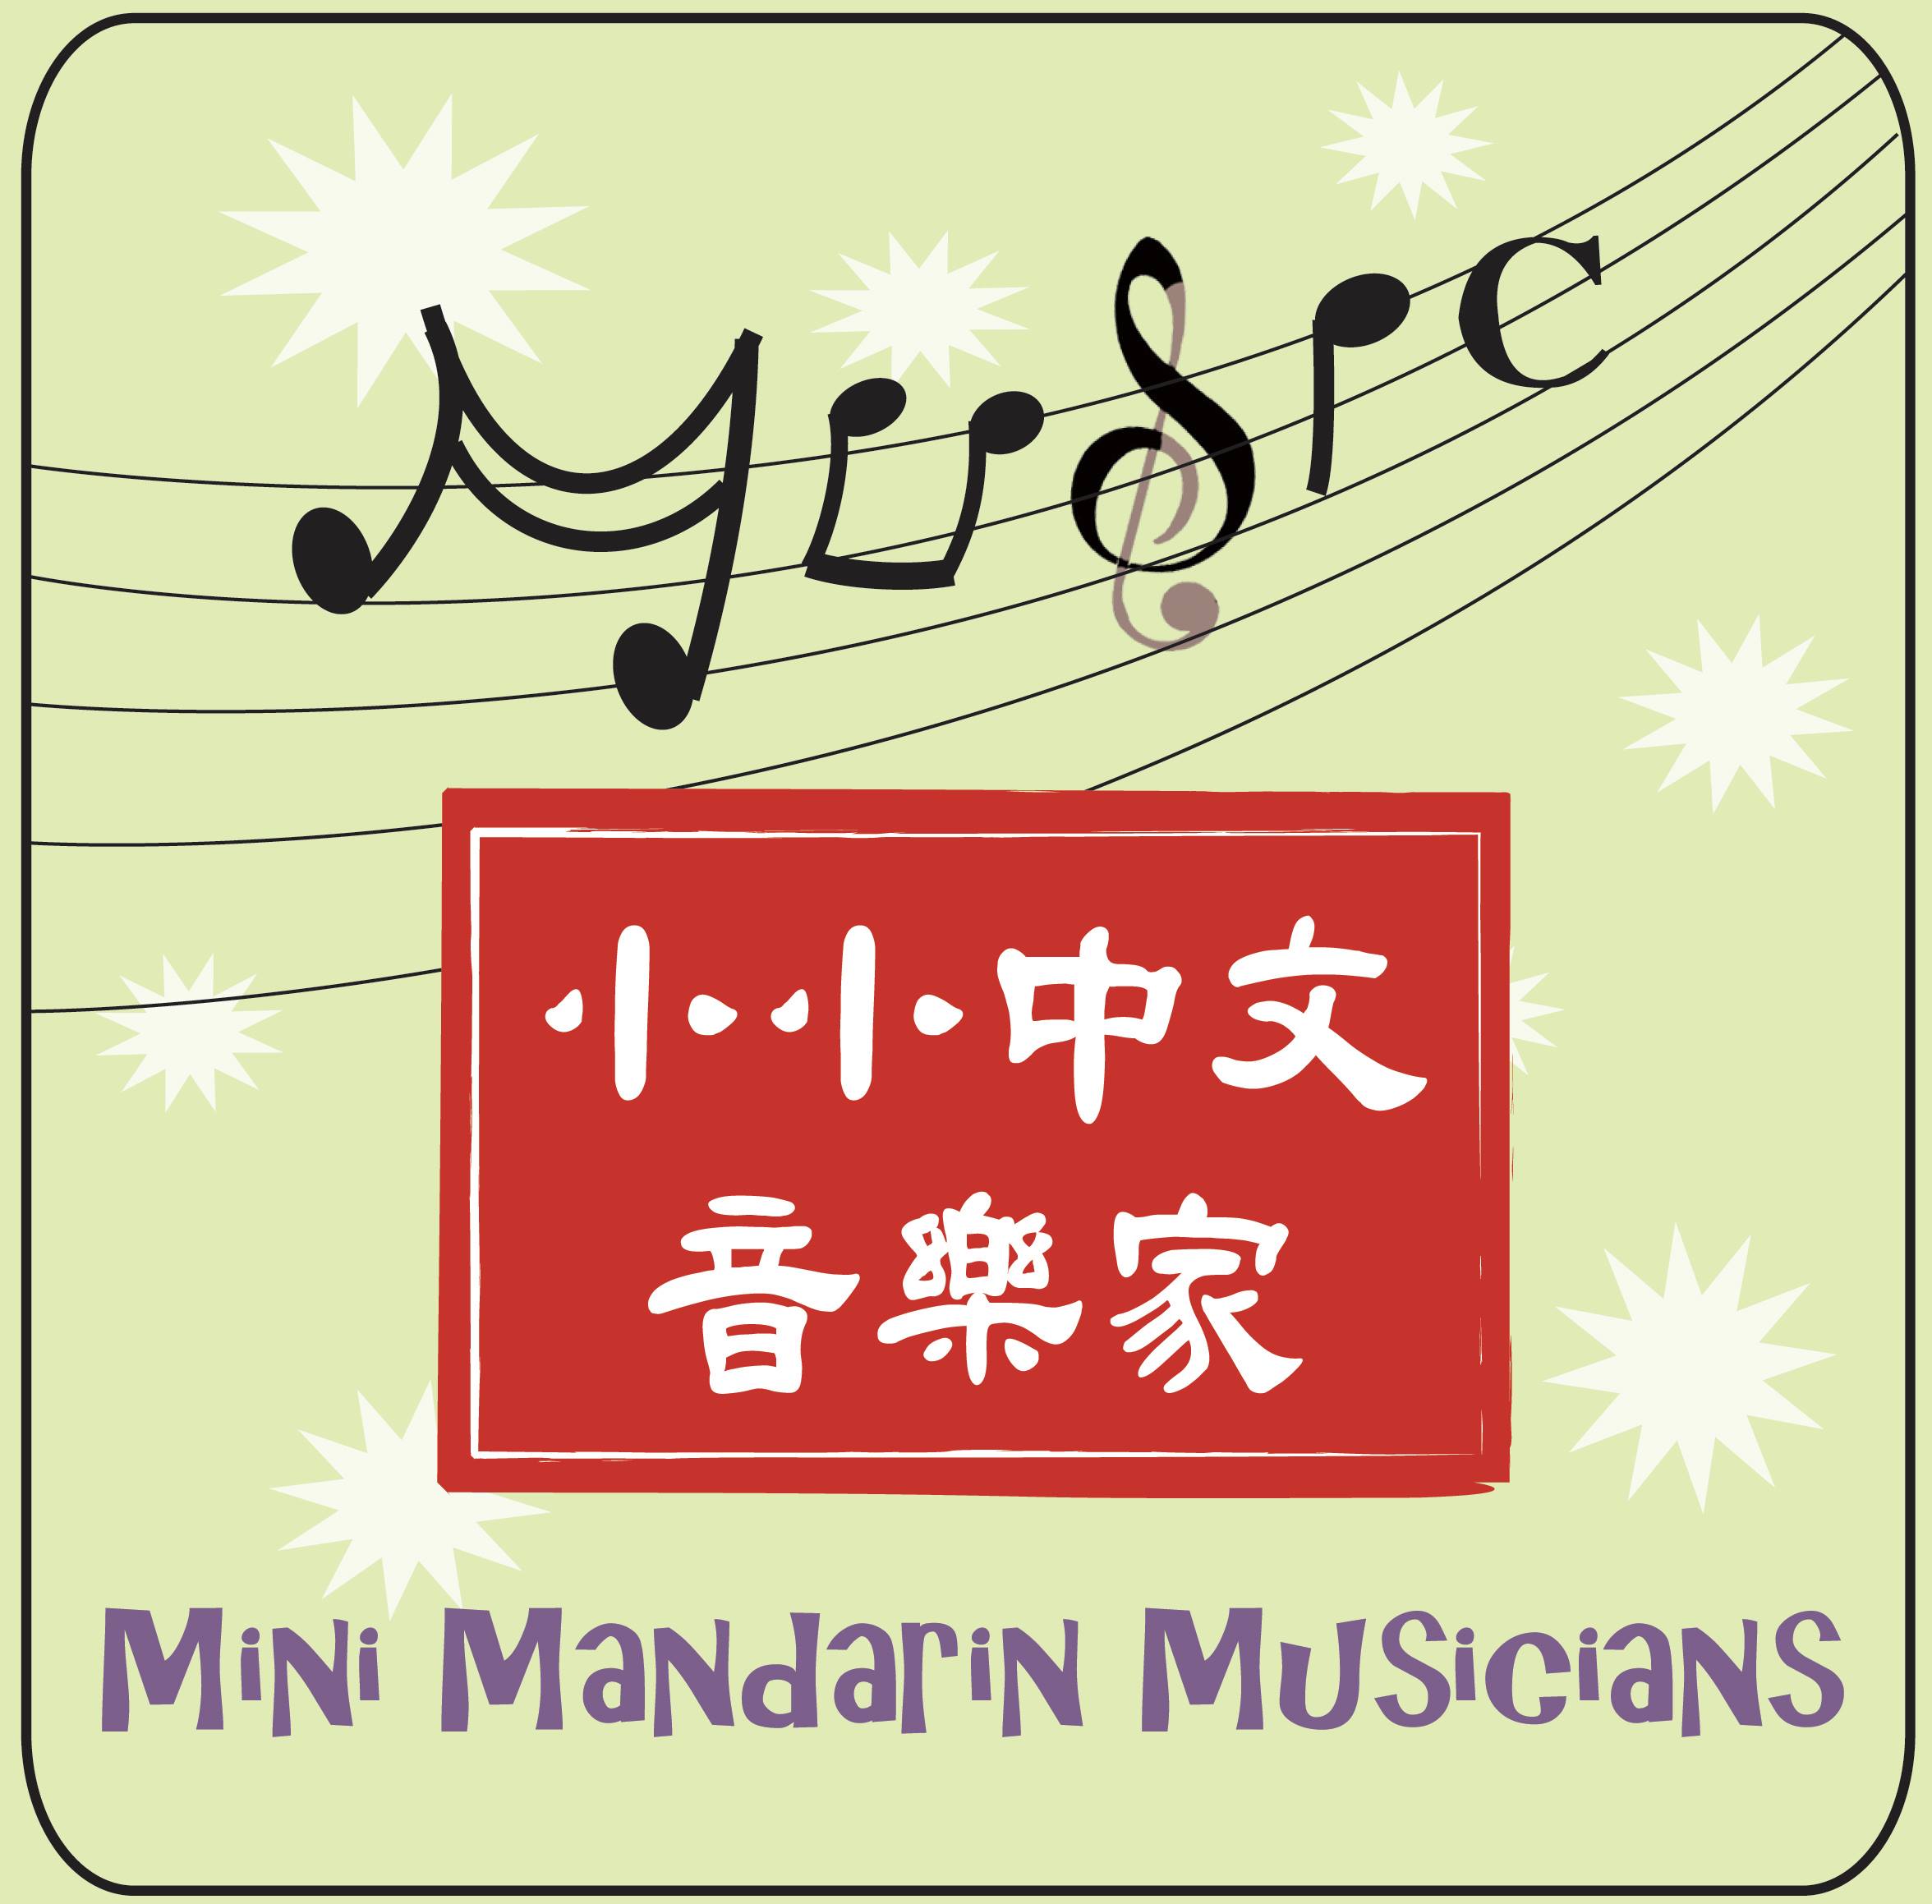 Mini Mandarin Musicians & Players's logo